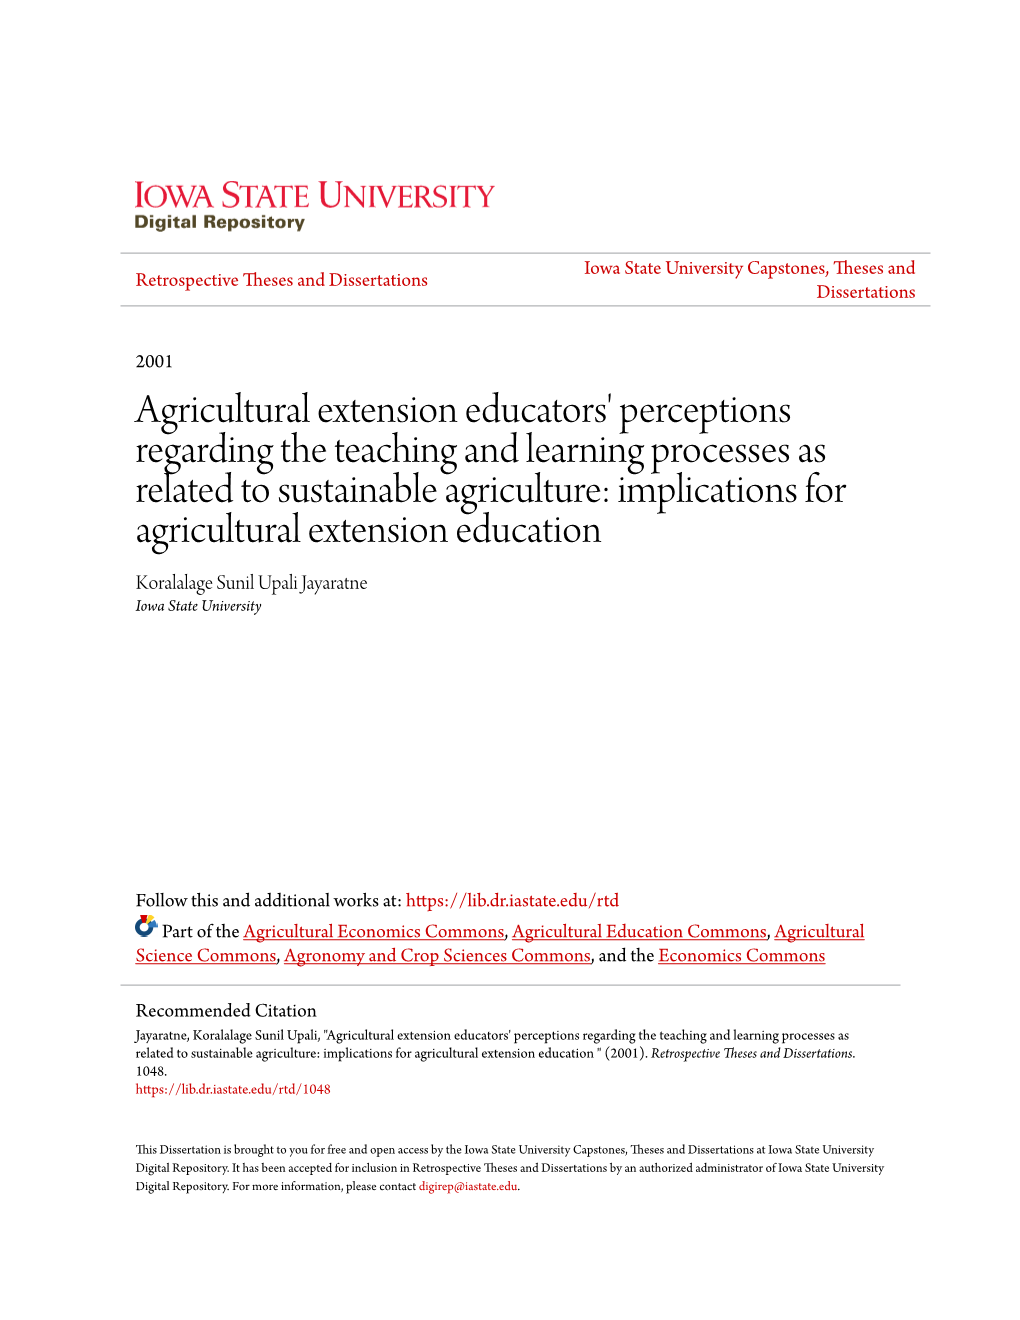 Agricultural Extension Educators' Perceptions Regarding the Teaching